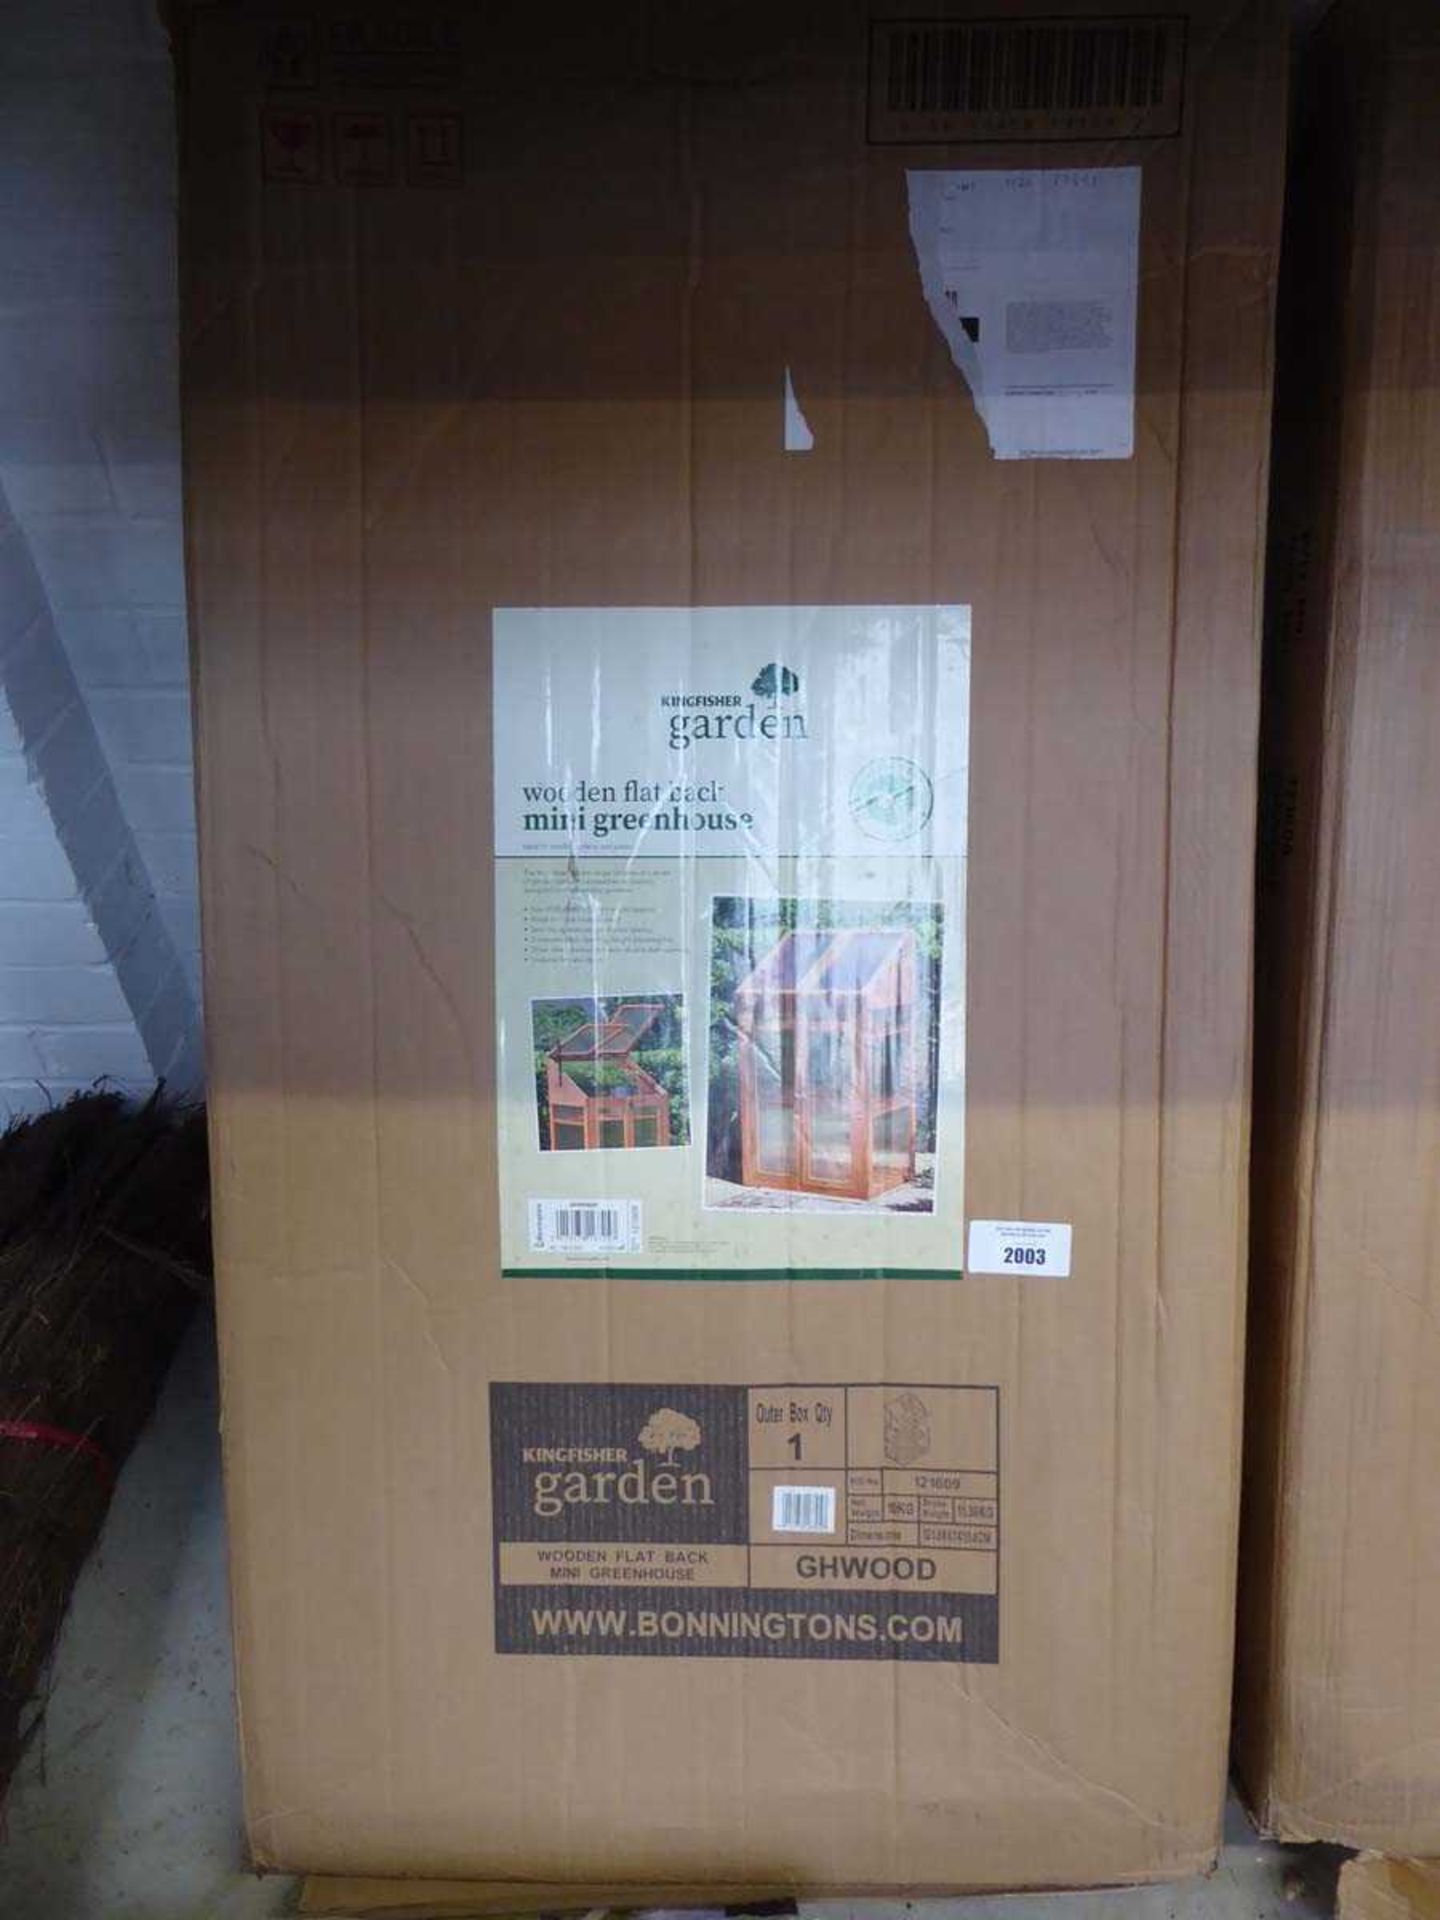 +VAT Boxed Kingfisher wooden flat pack 2 door mini greenhouse